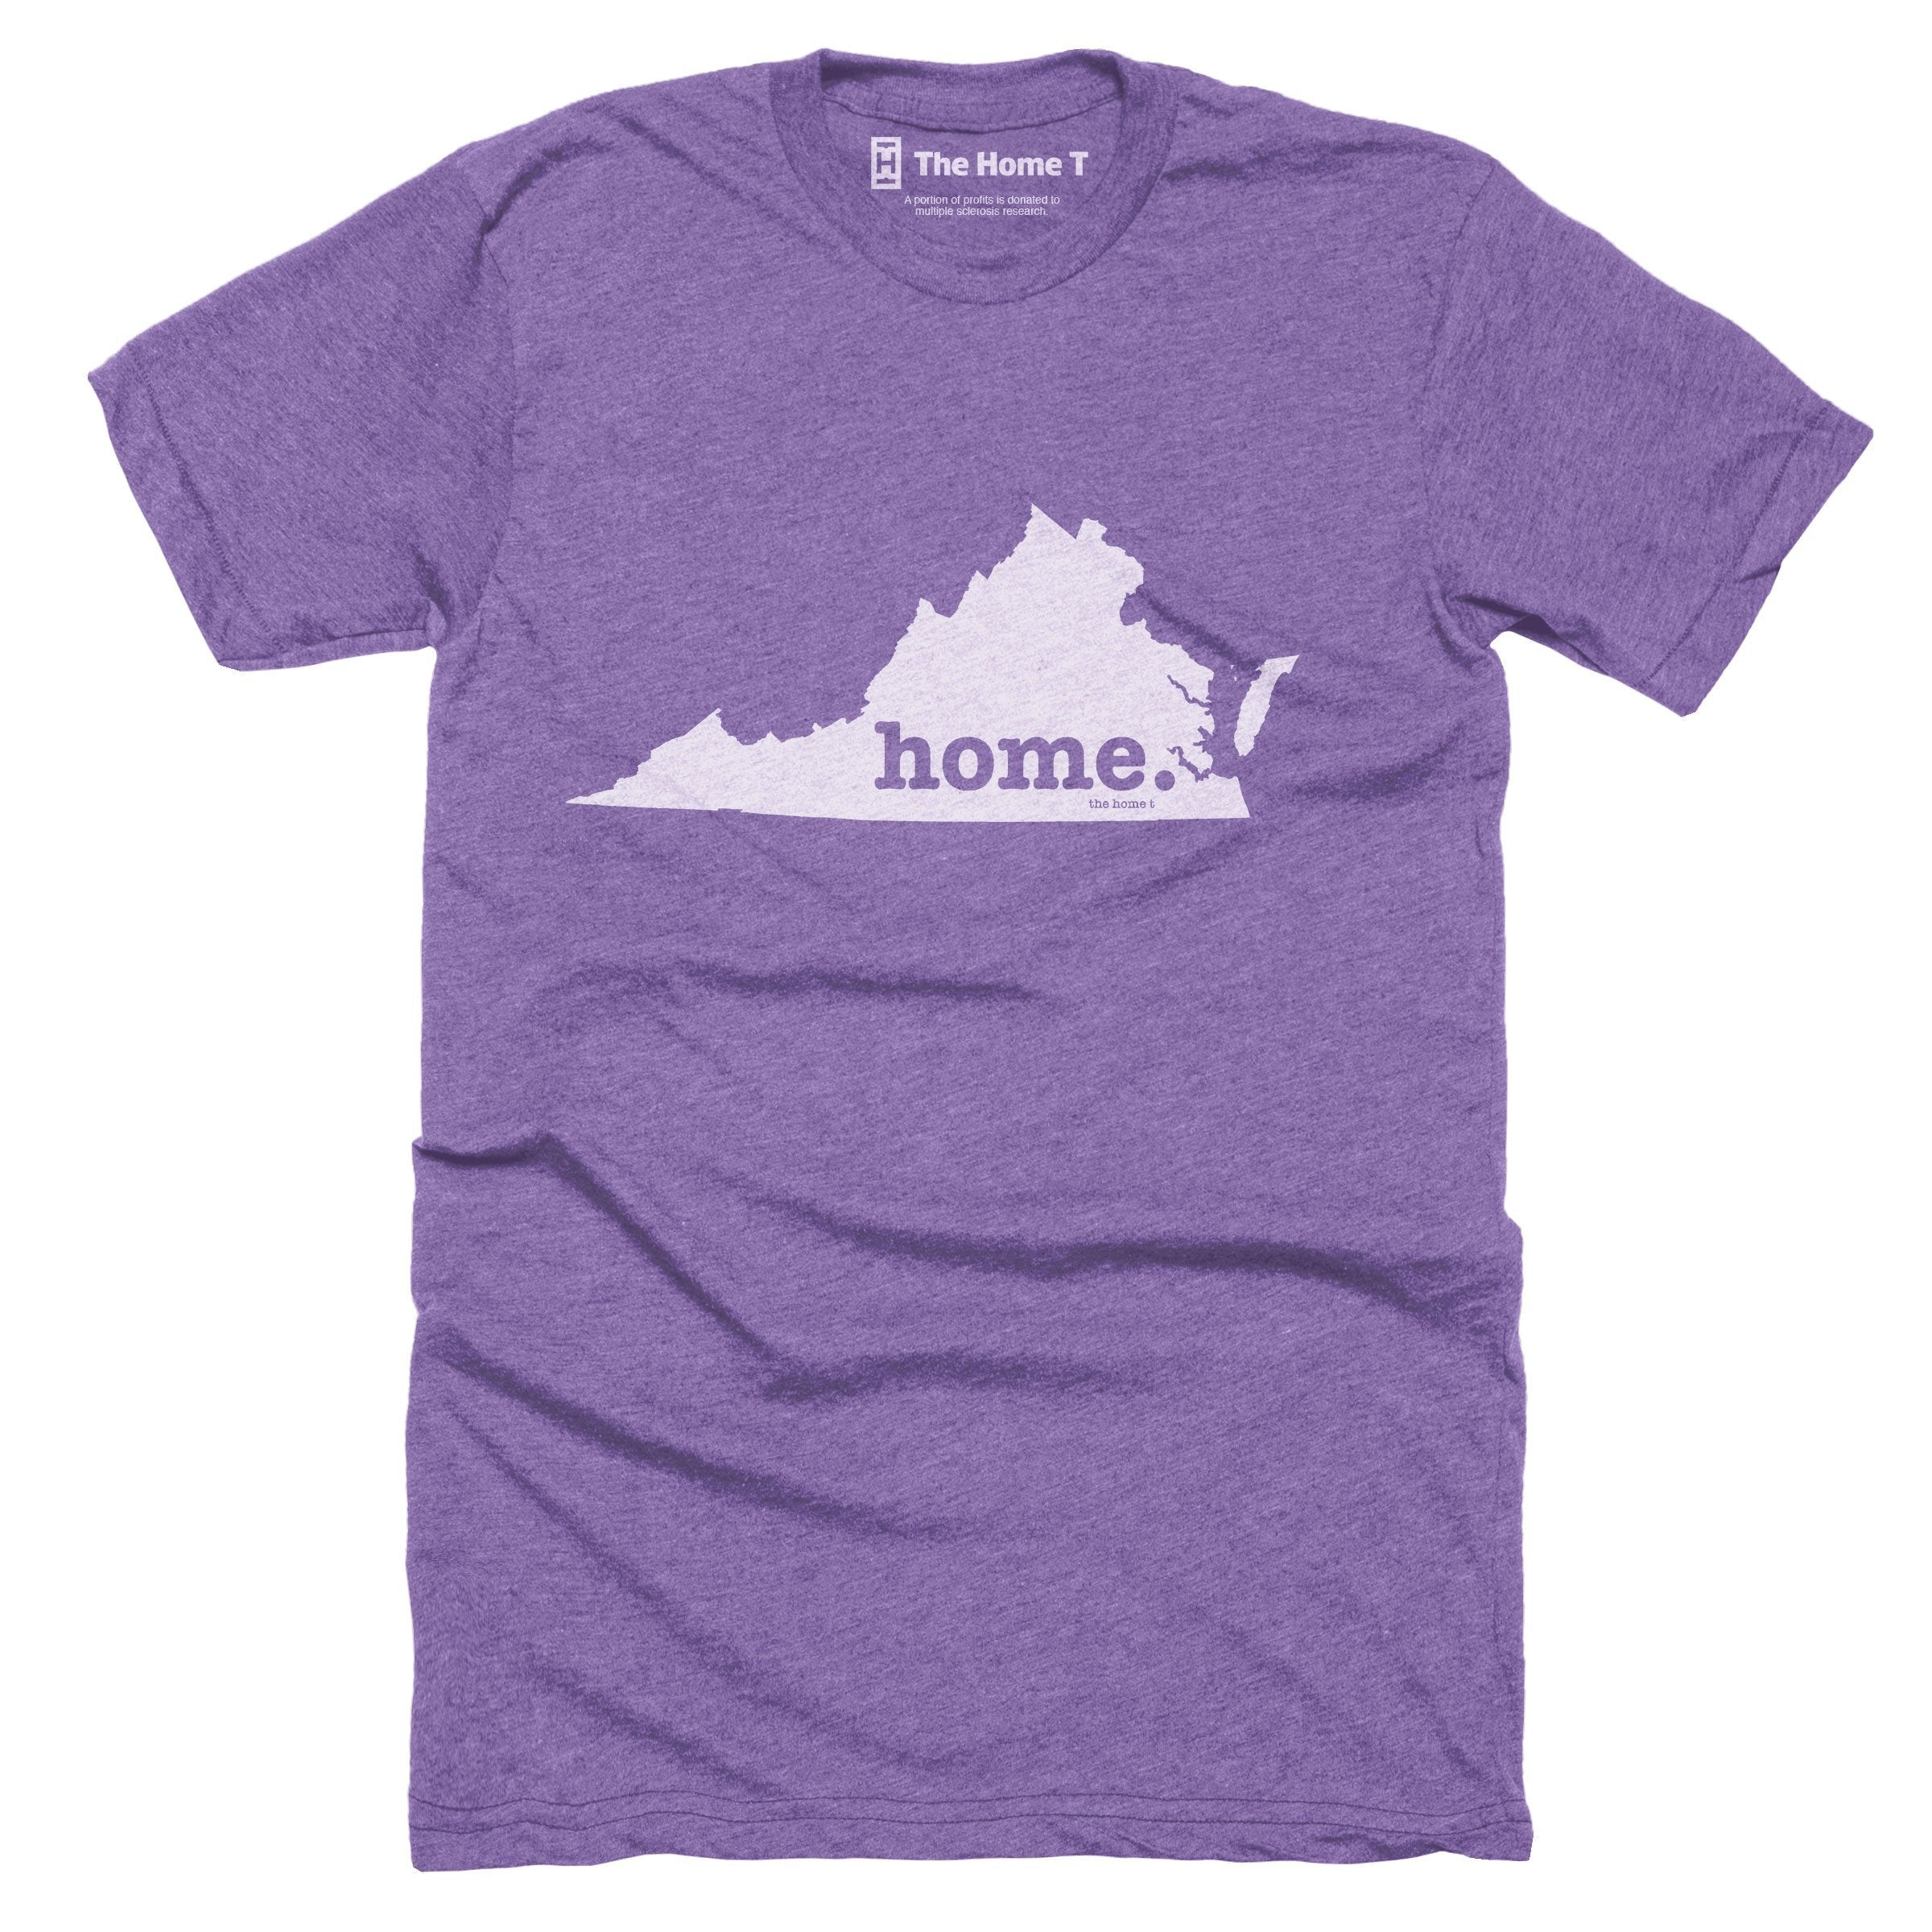 Virginia Purple Limited Edition Shirts